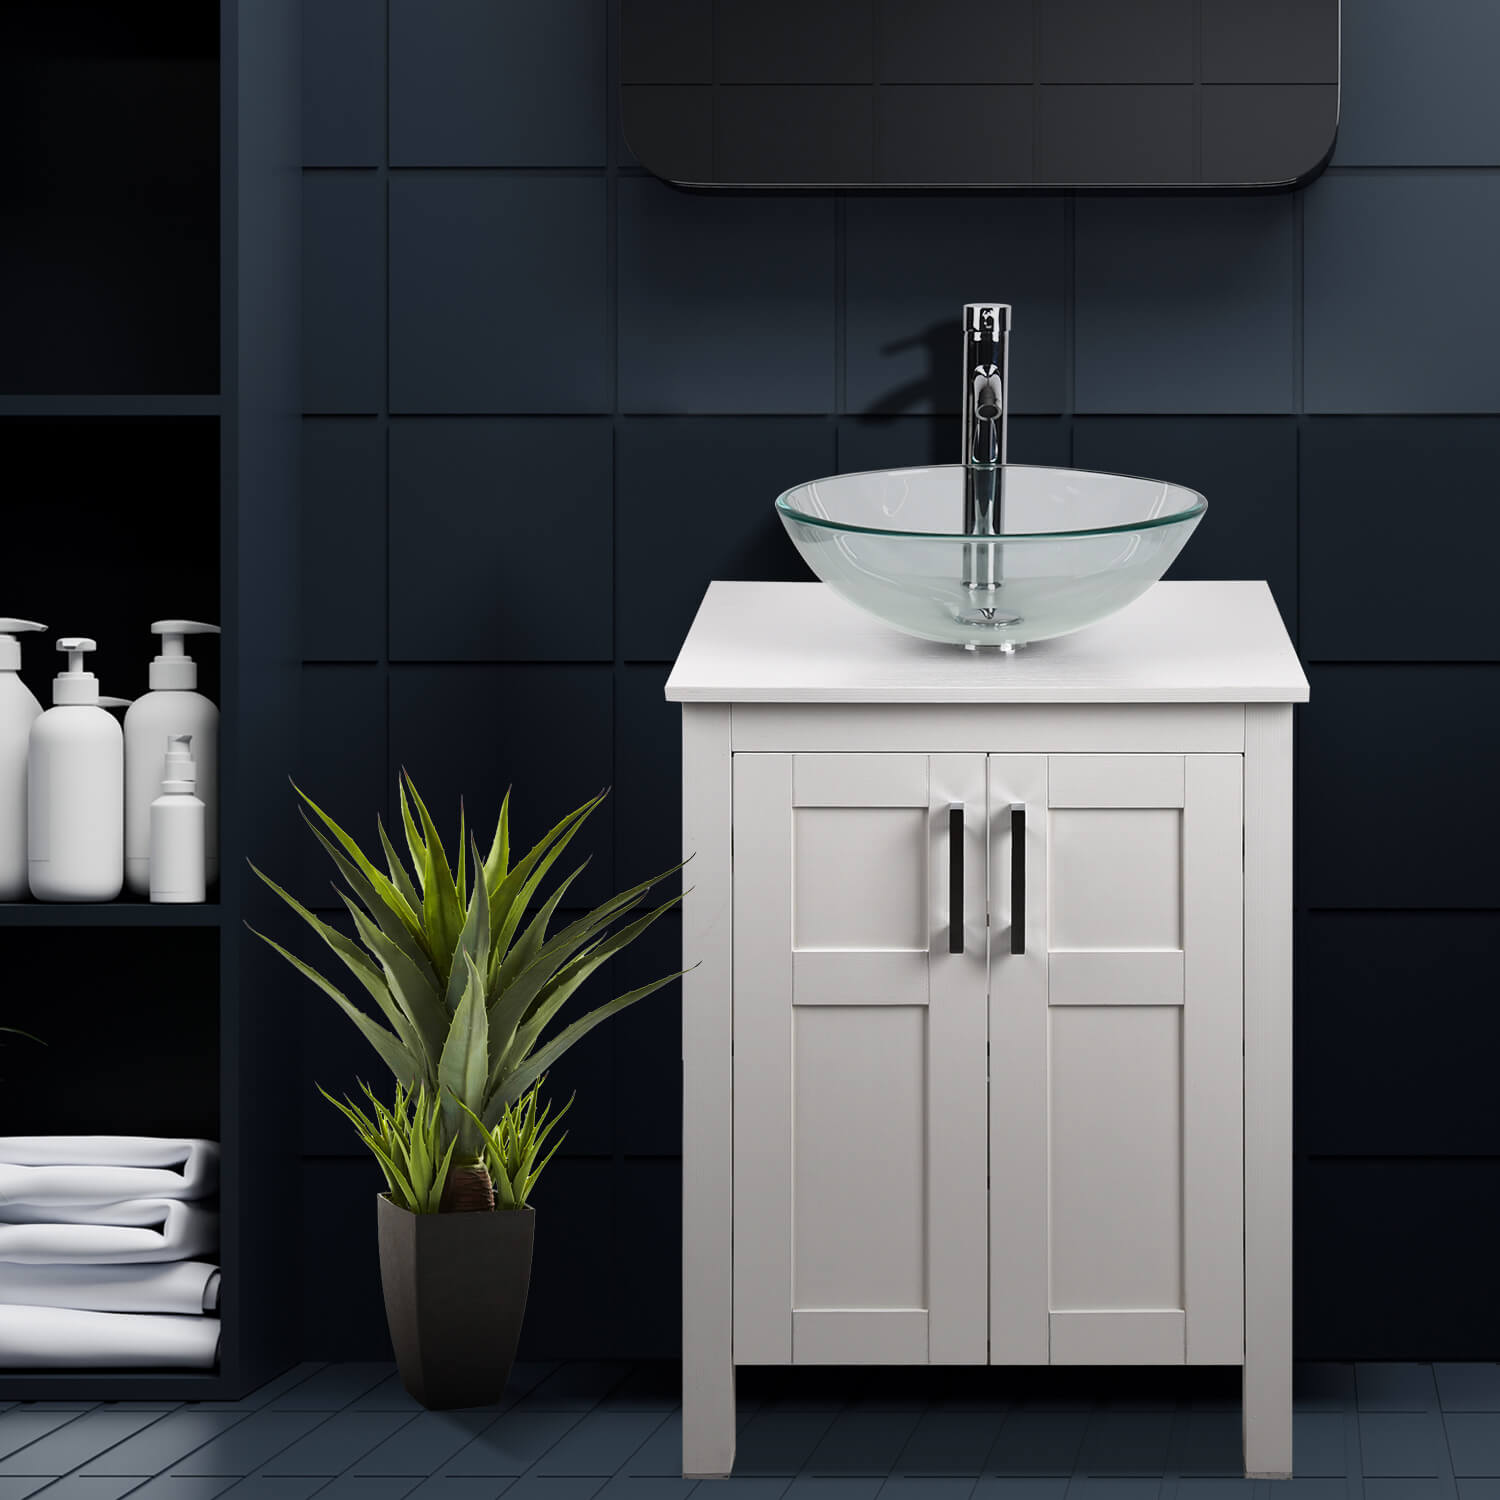 Elecwish White Bathroom Vanity and Clear Glass Sink Set HW1120-WH display scene